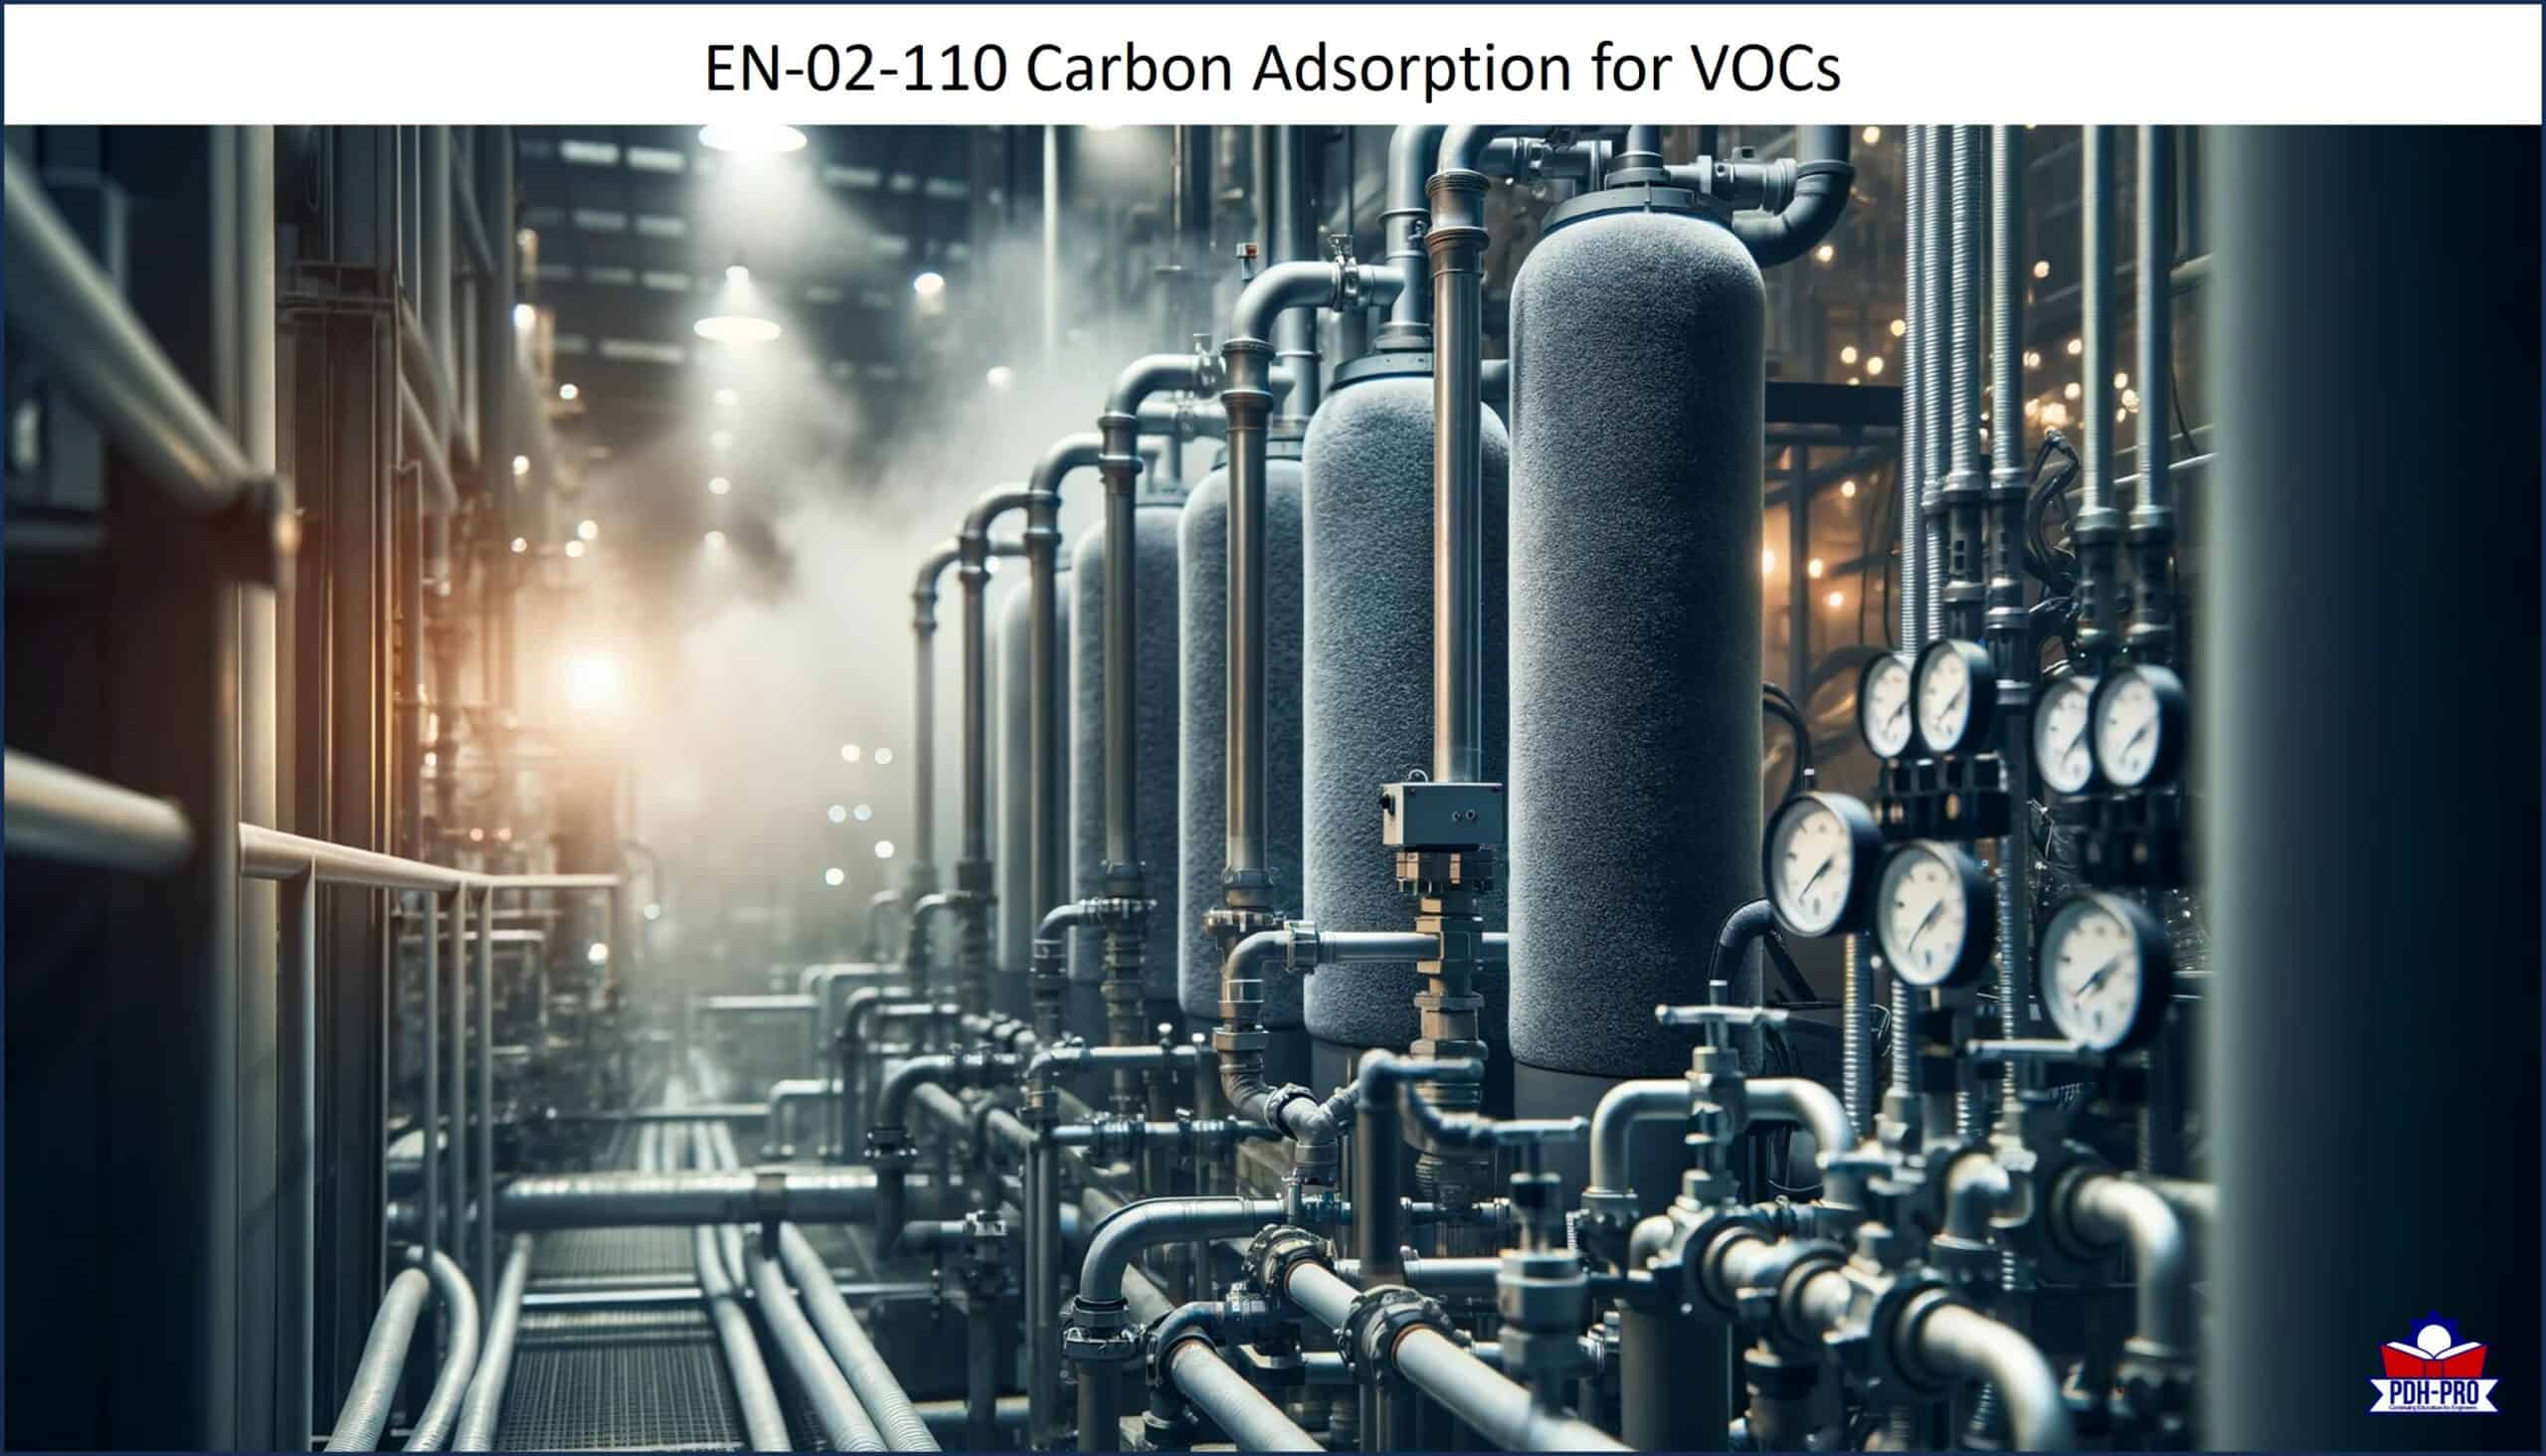 Carbon Adsorption for VOCs